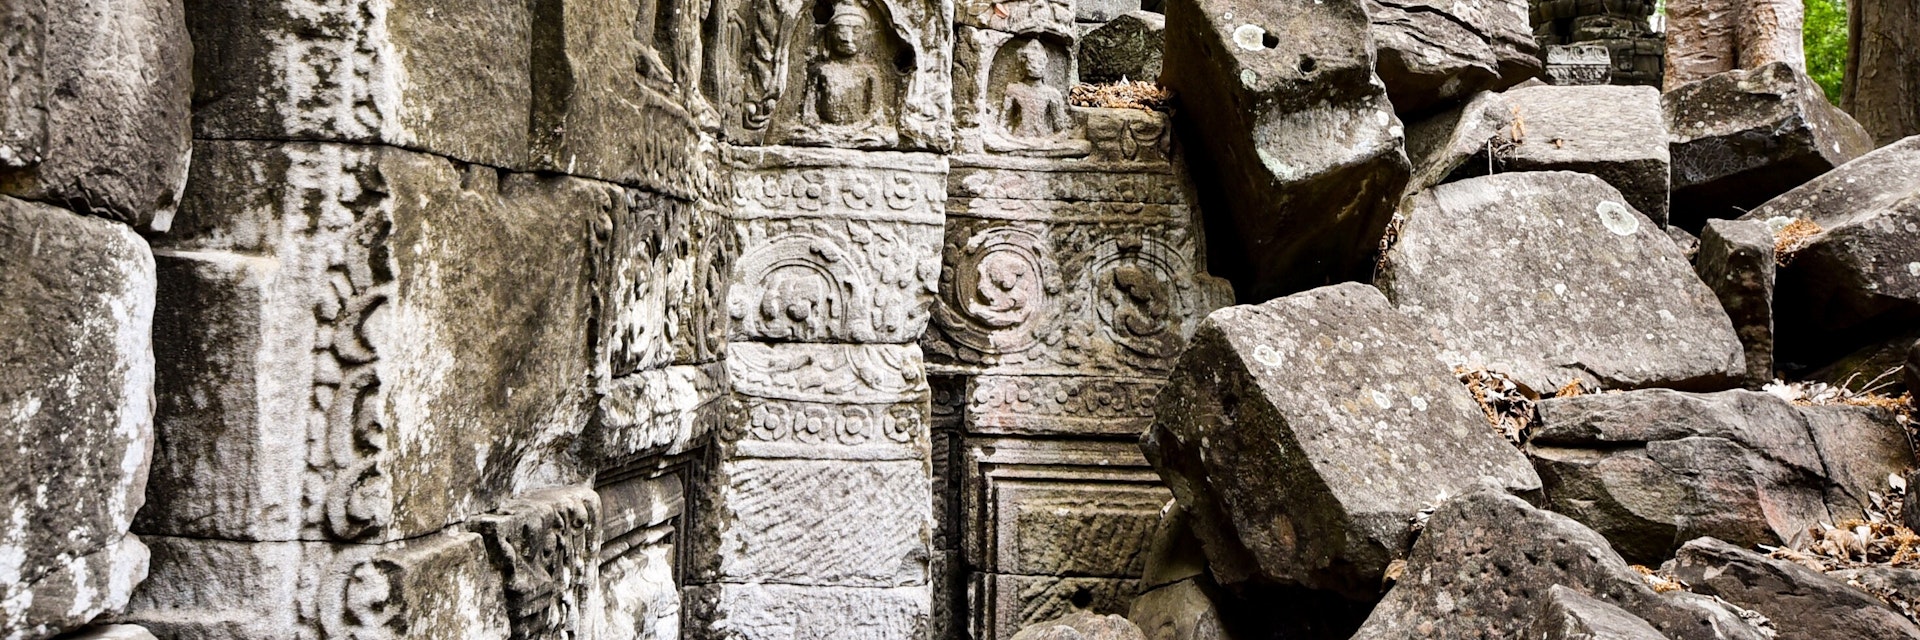 Banteay Chhmar castle cambodia; Shutterstock ID 709420321; your: Sloane Tucker; gl: 65050; netsuite: Online Editorial; full: POI
709420321